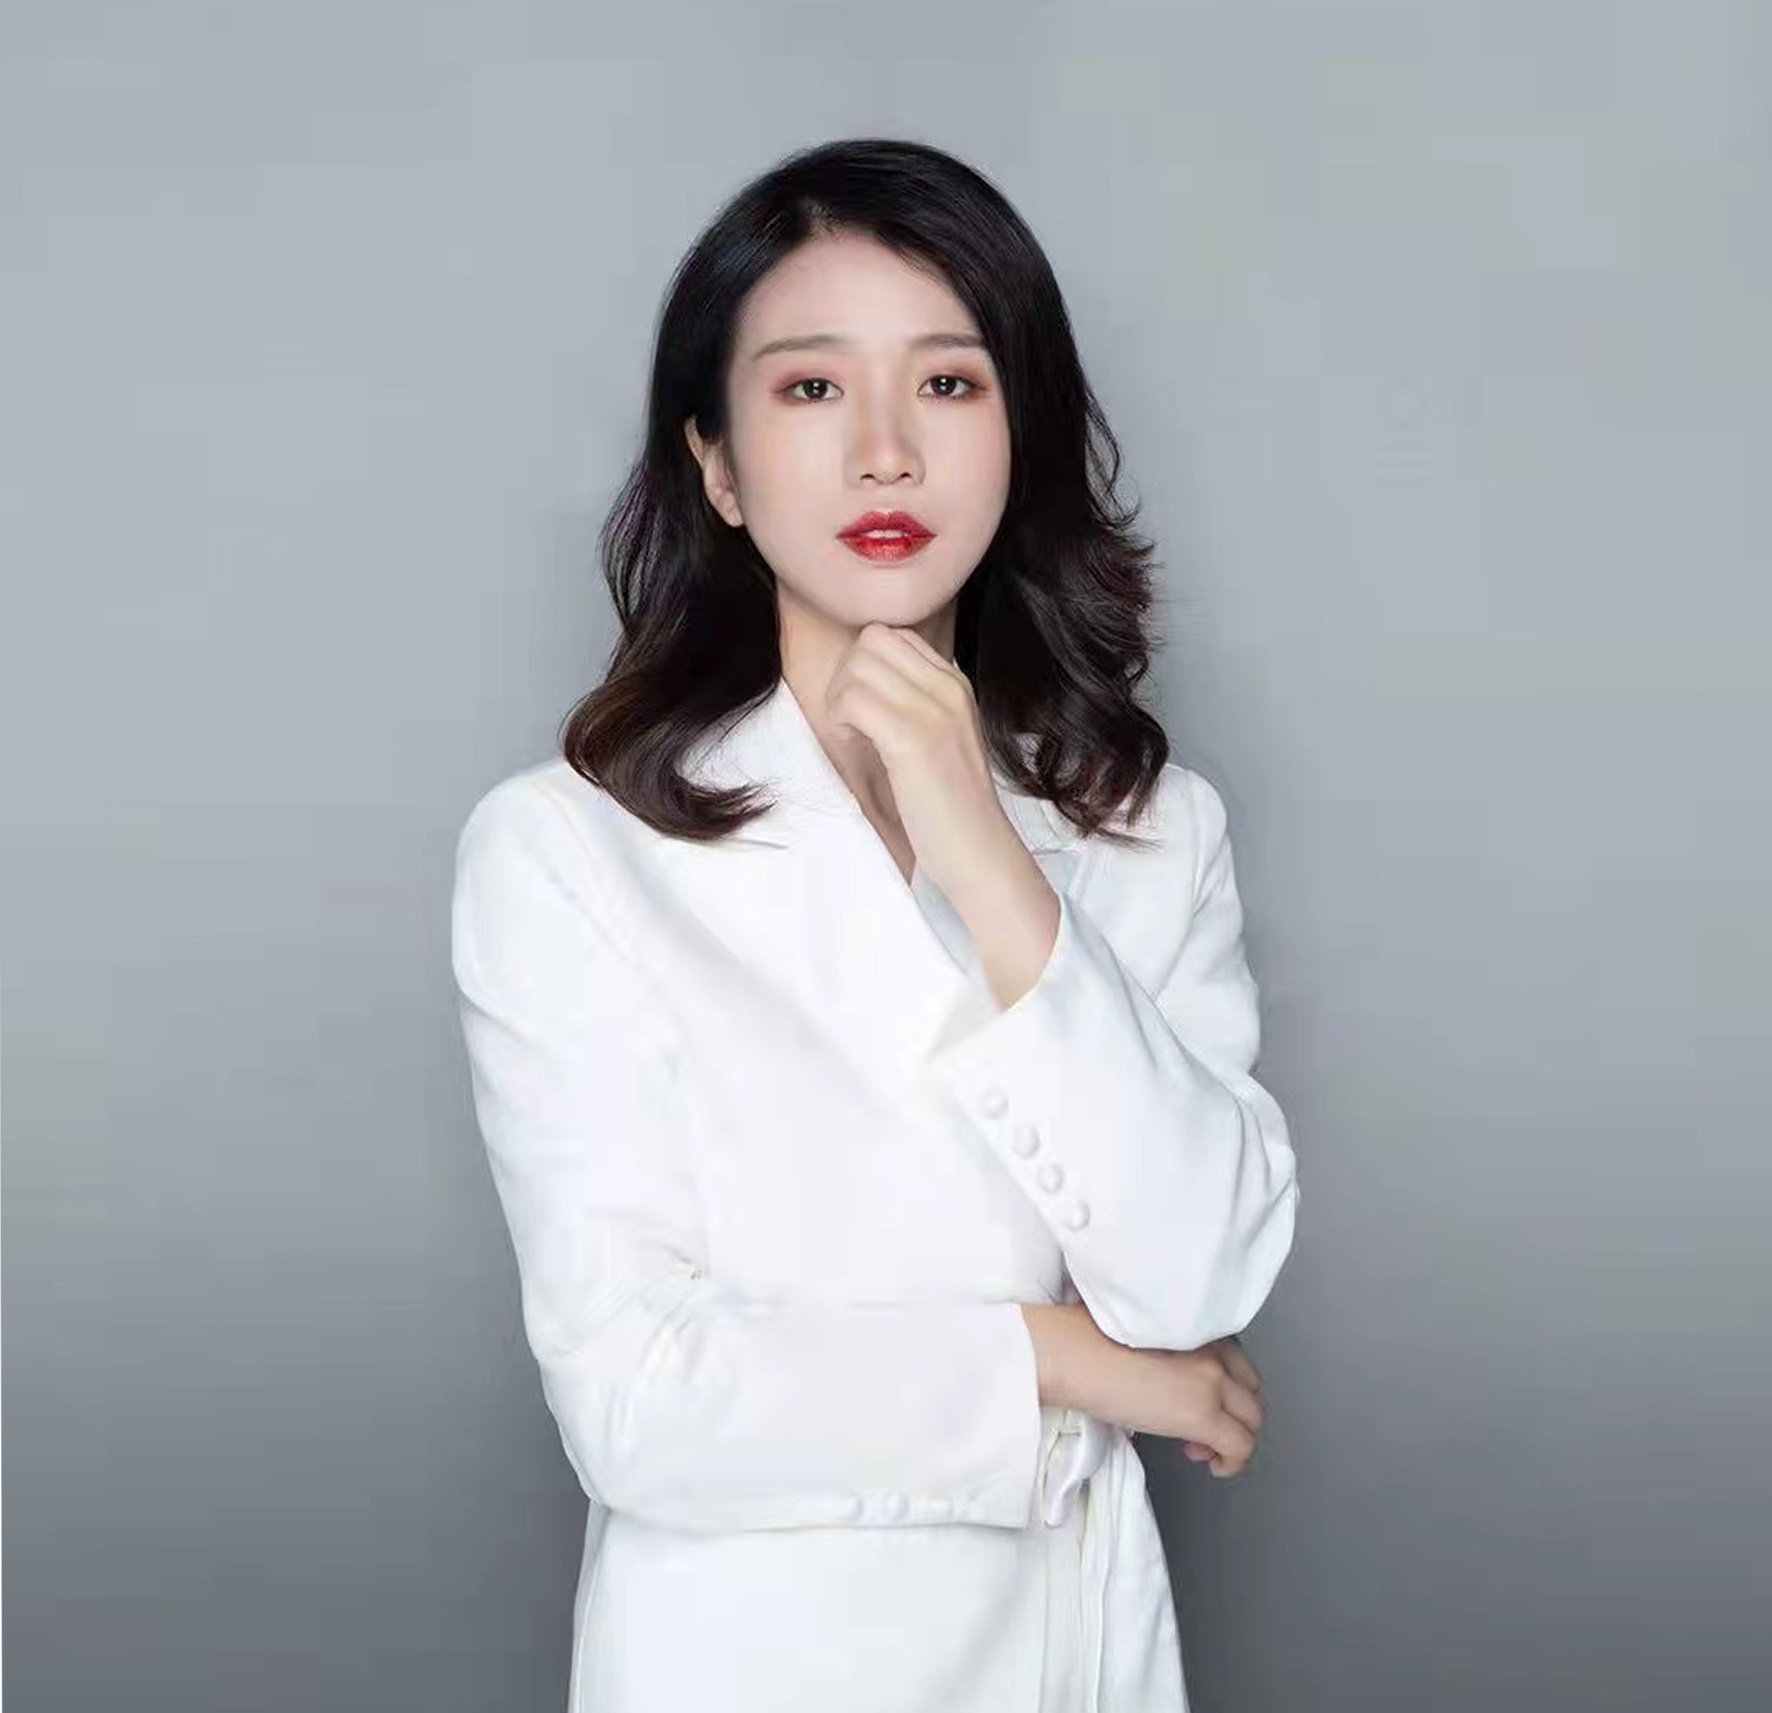 CEO - Ma Qiumei